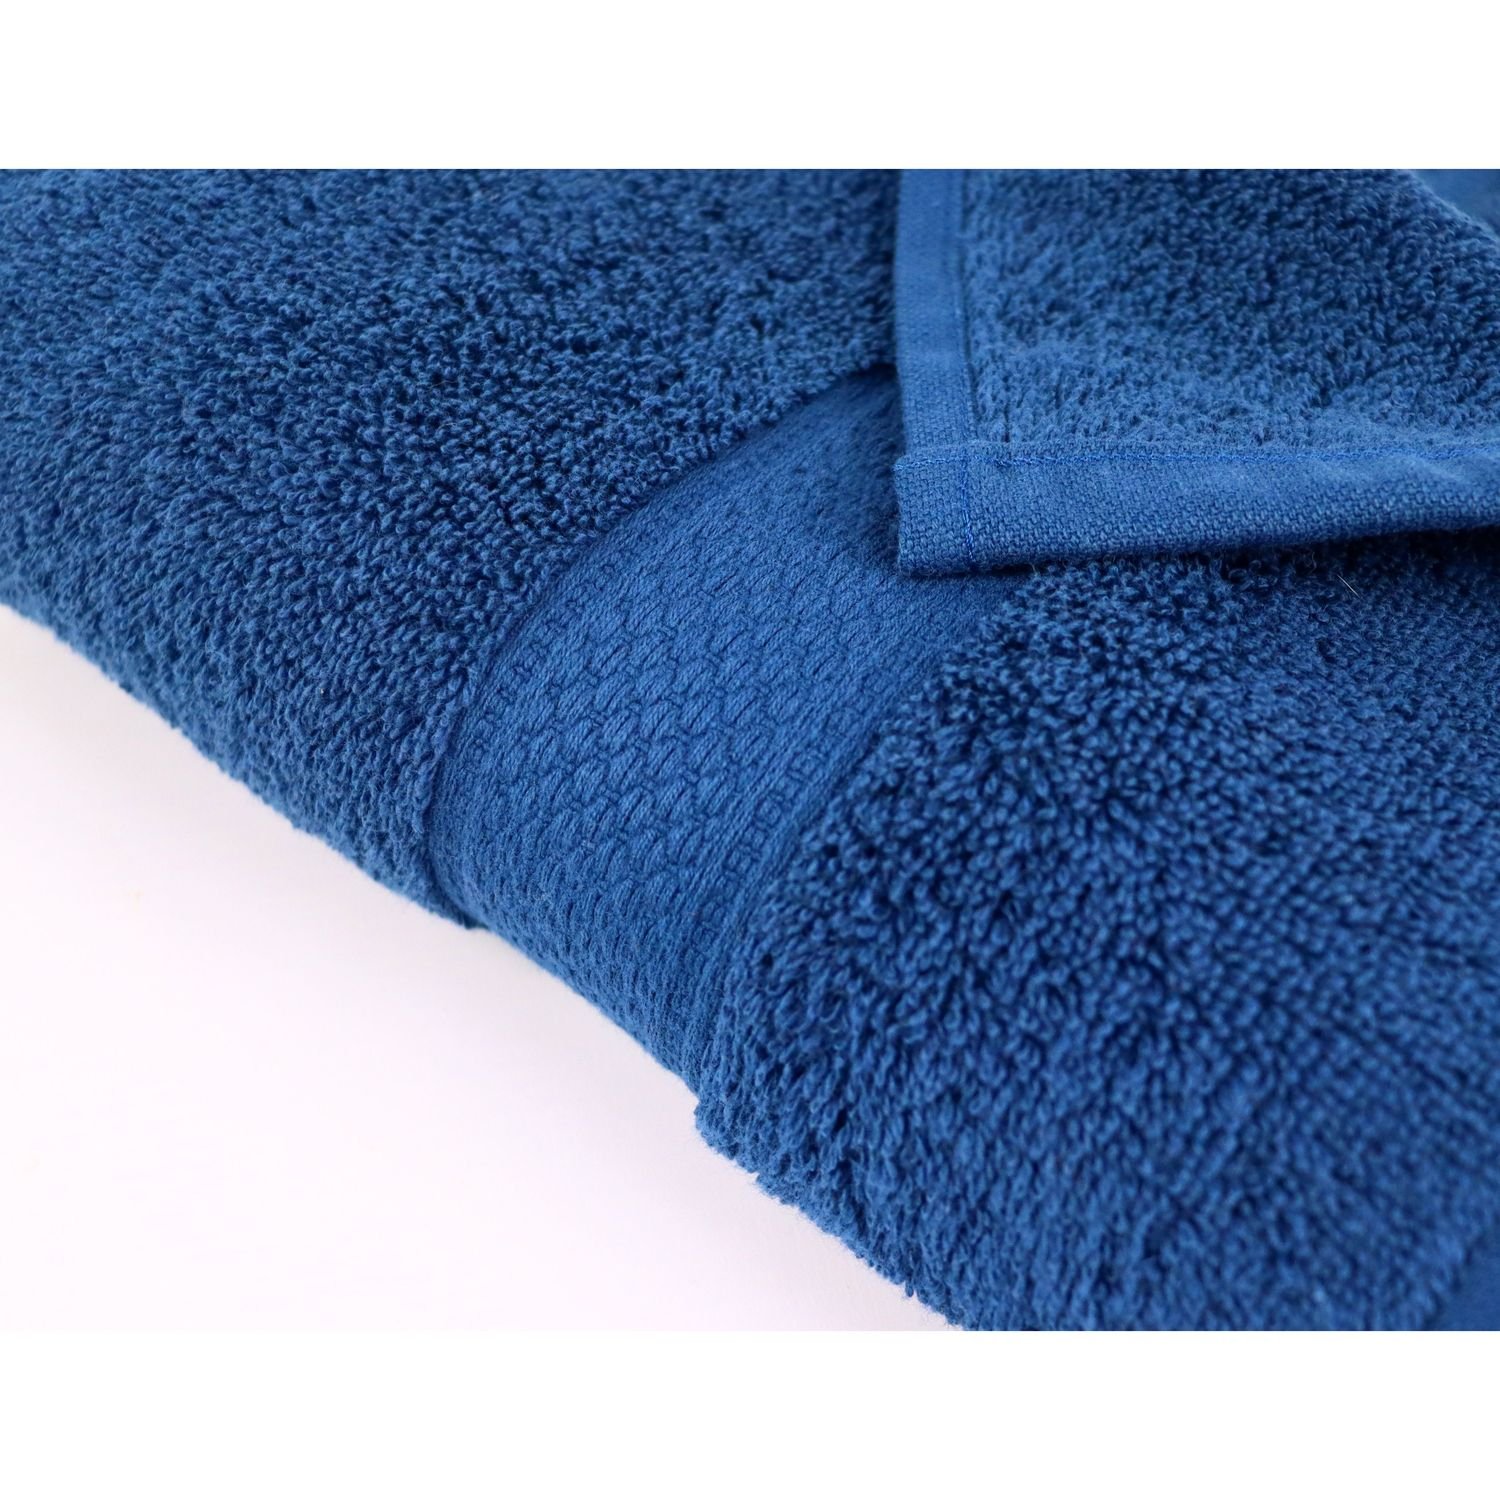 Полотенце Izzihome Colorful Lacivert махровое 100х50 см темно-синее (39453) - фото 4